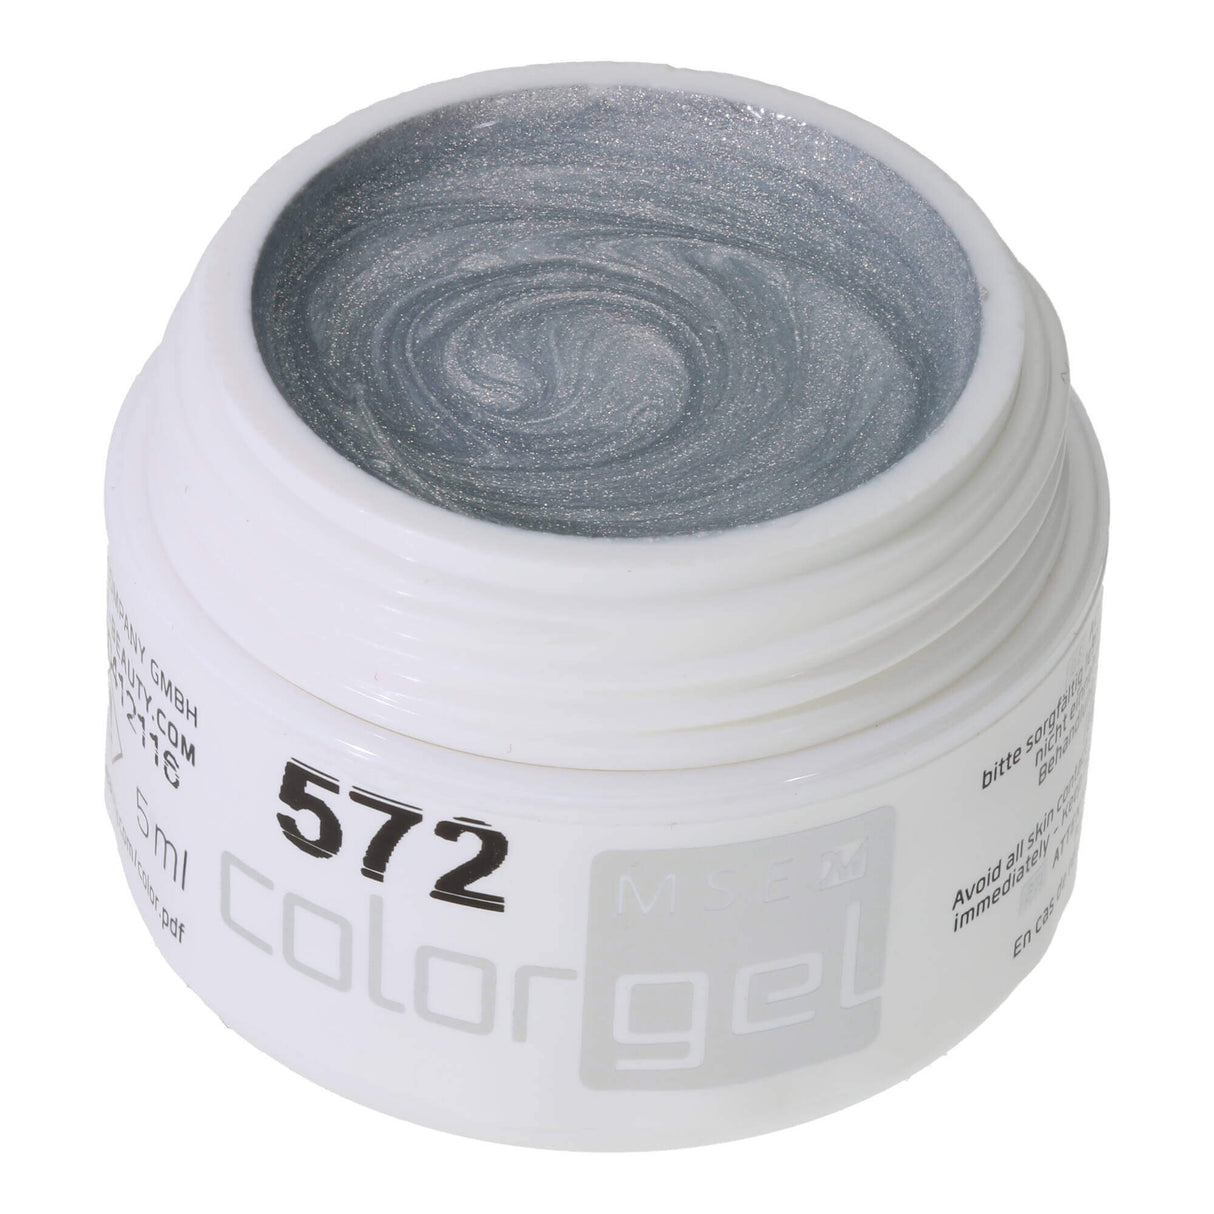 # 572 Premium EFFECT Color Gel 5ml metallic gel